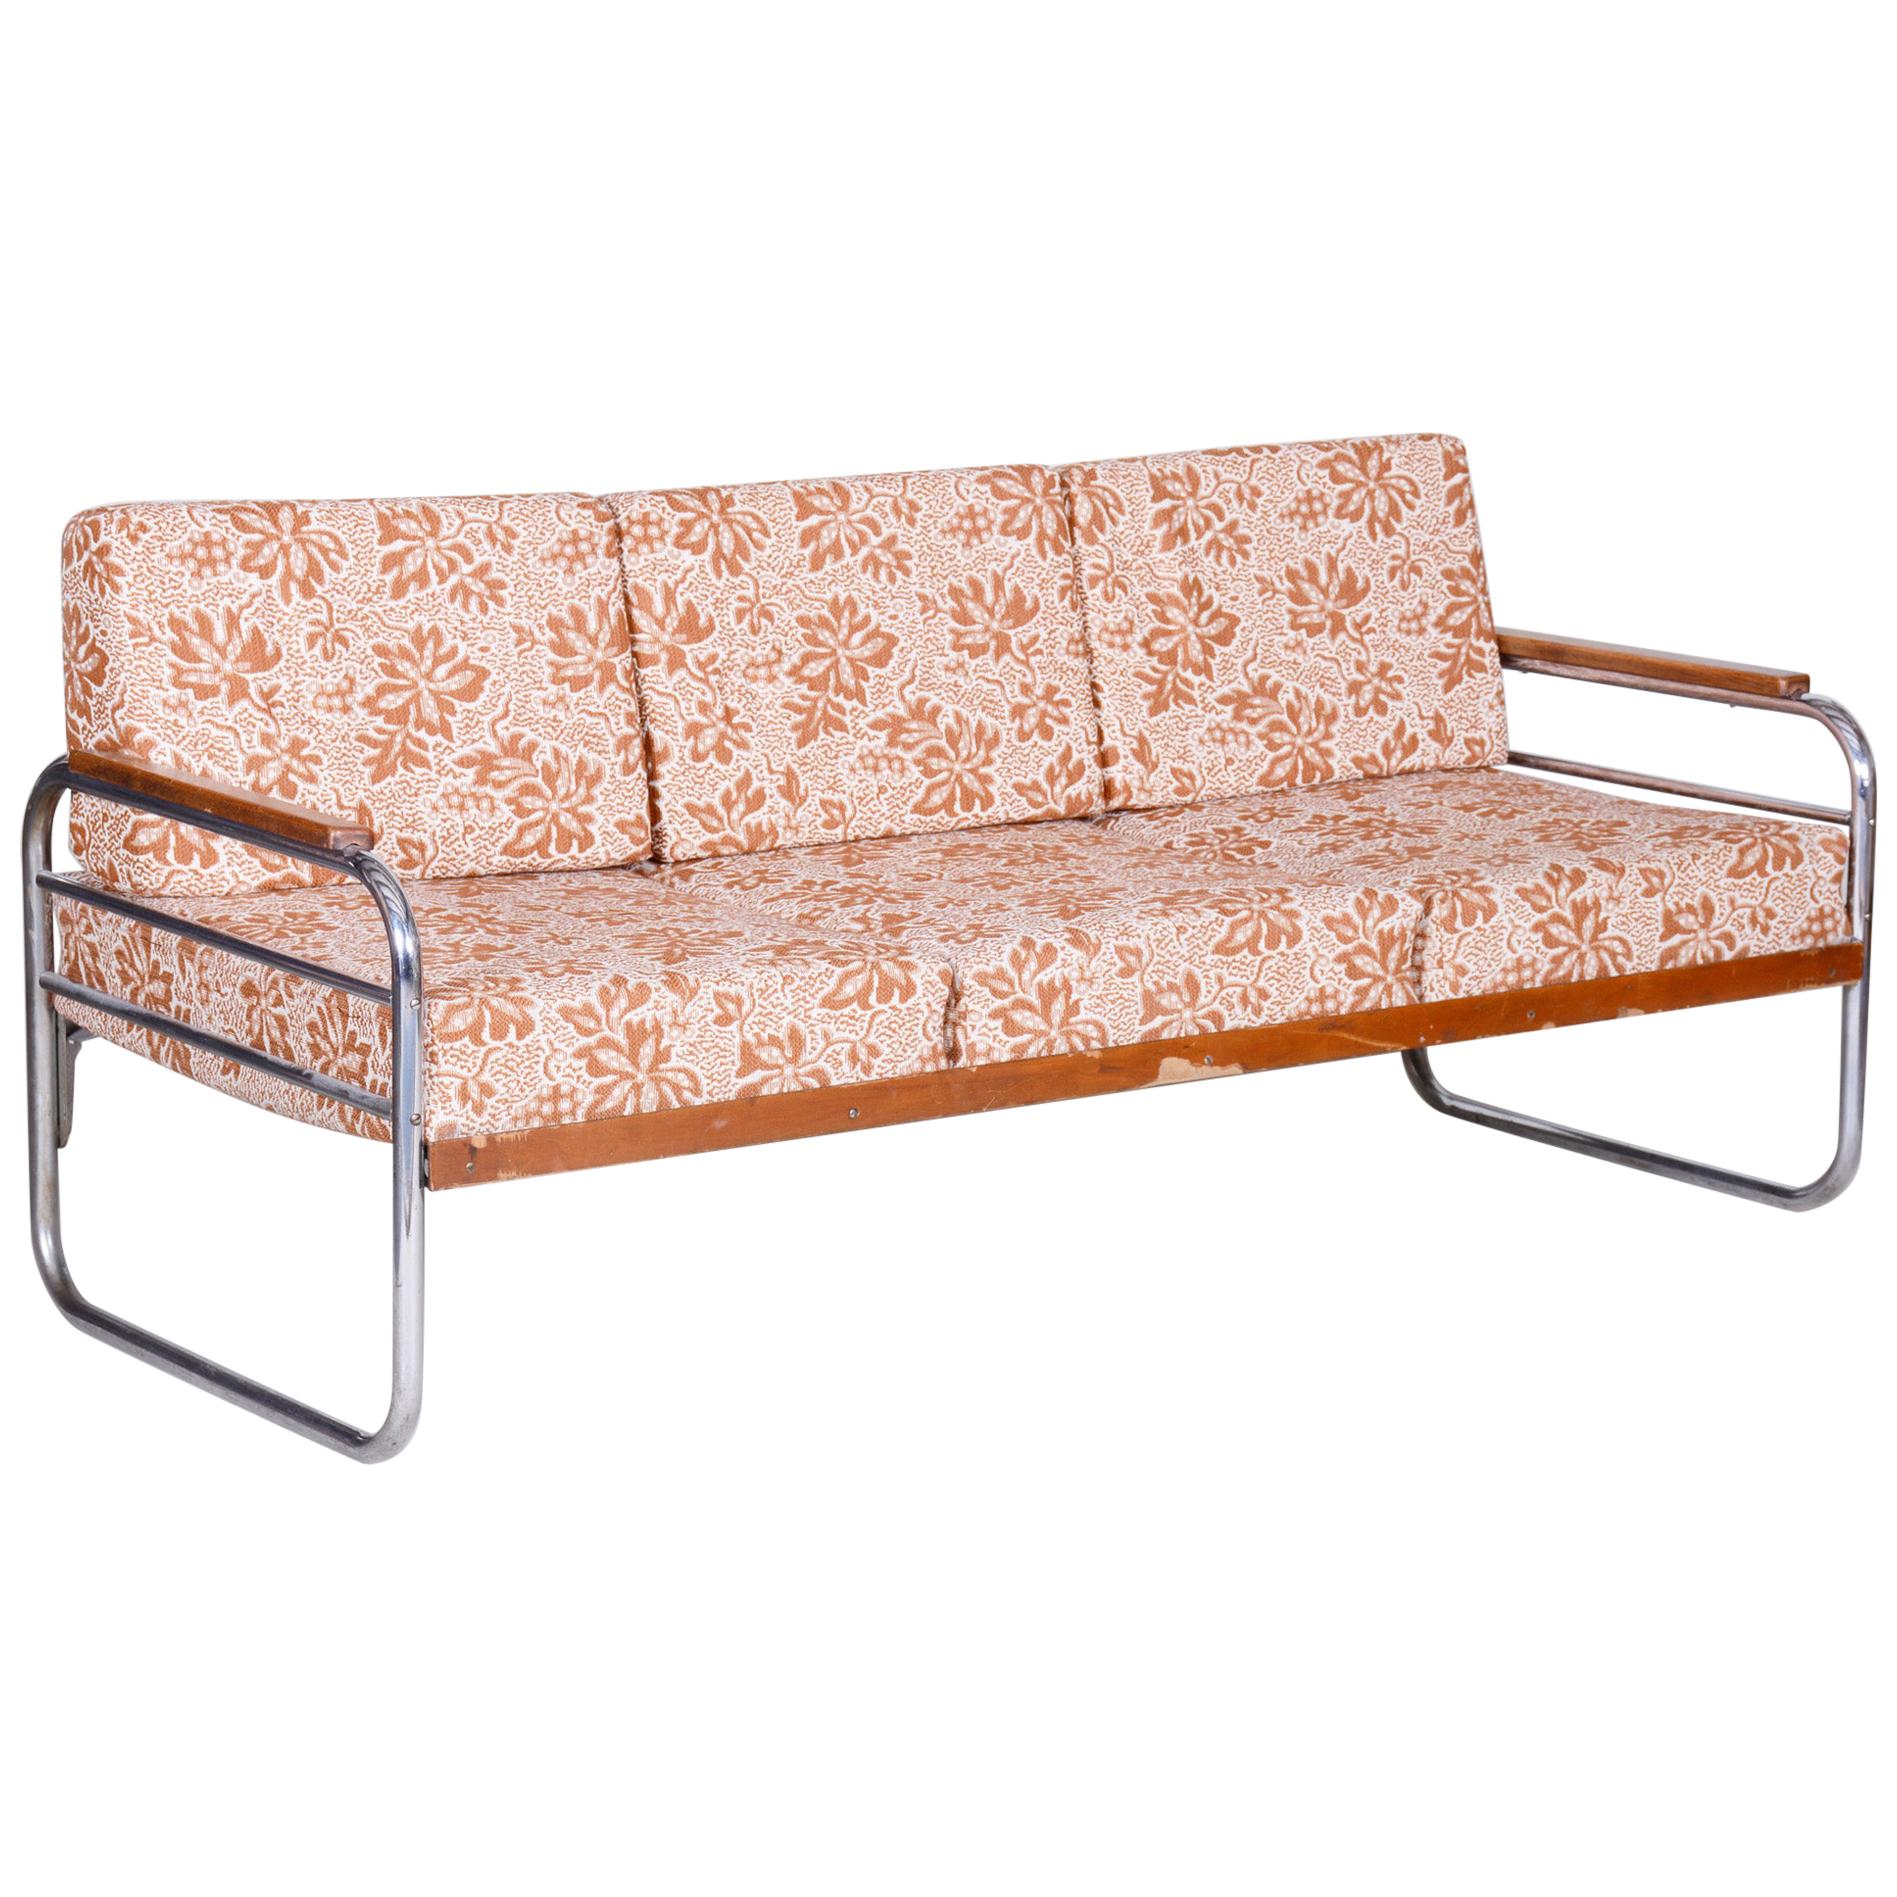 Fully Original Bauhaus fabric Tubular Chrome Sofa by Vichr a Spol, 1930s Czechia For Sale